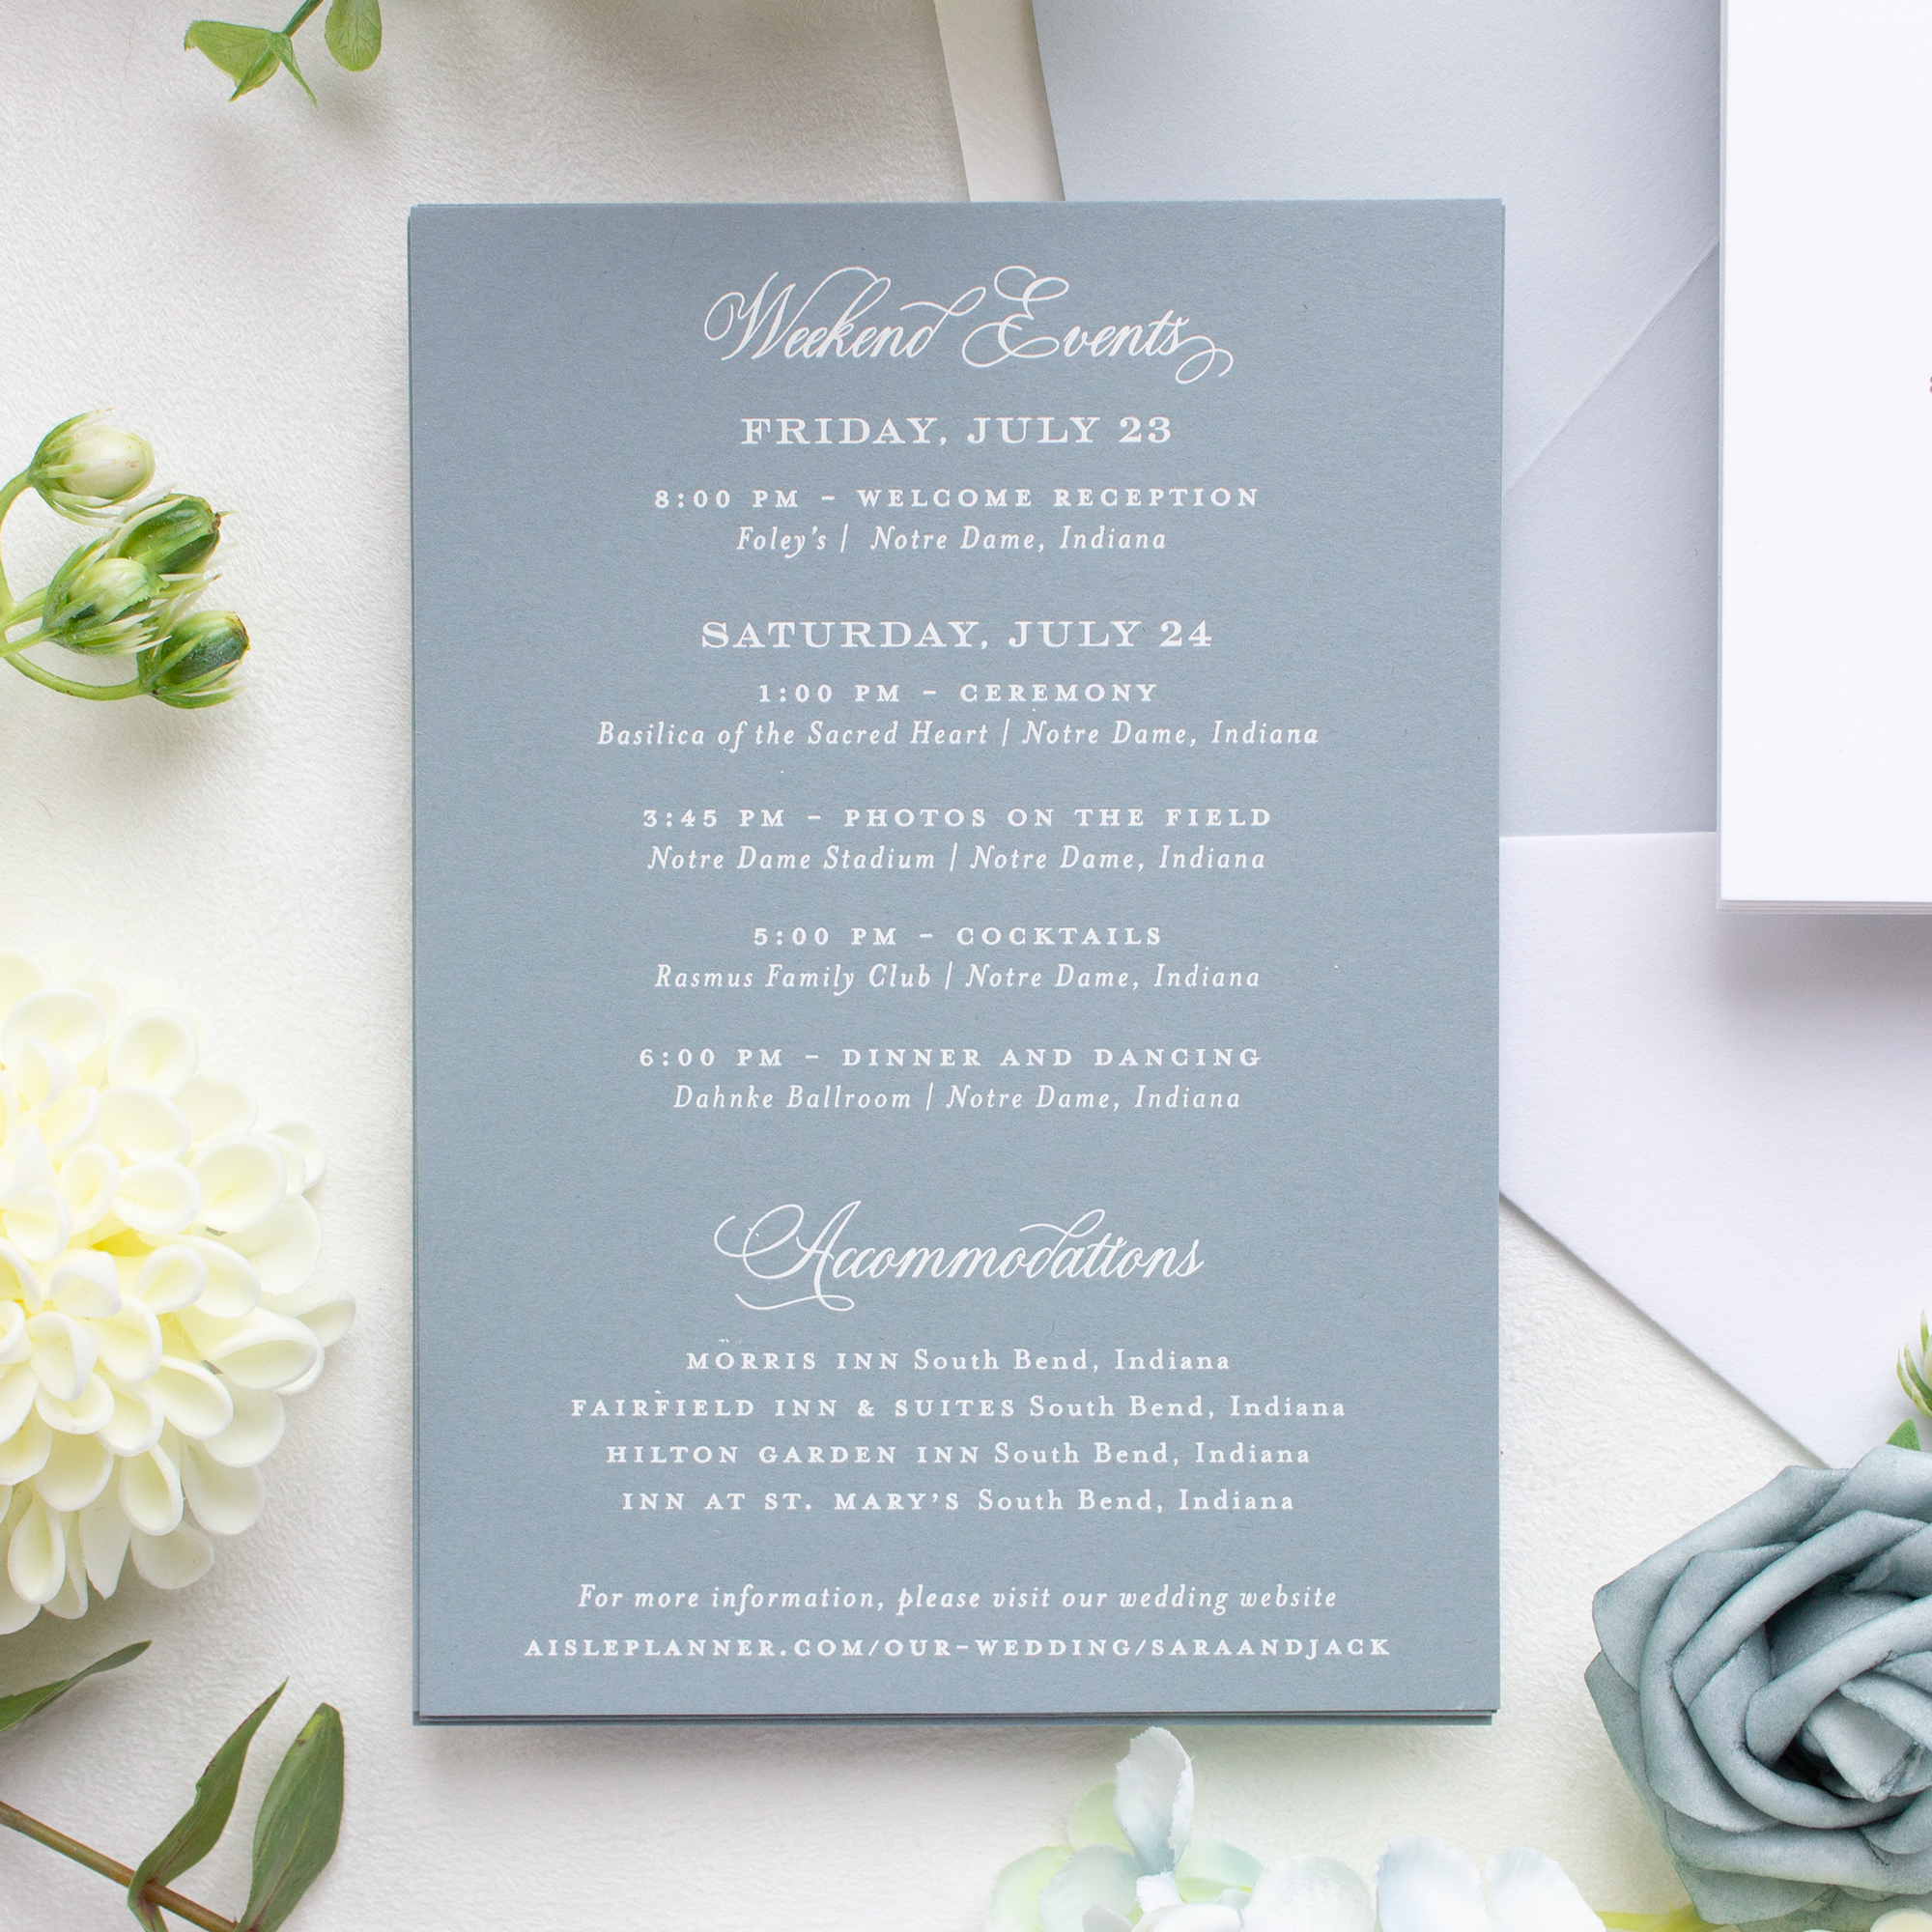 weekend events wedding insert card